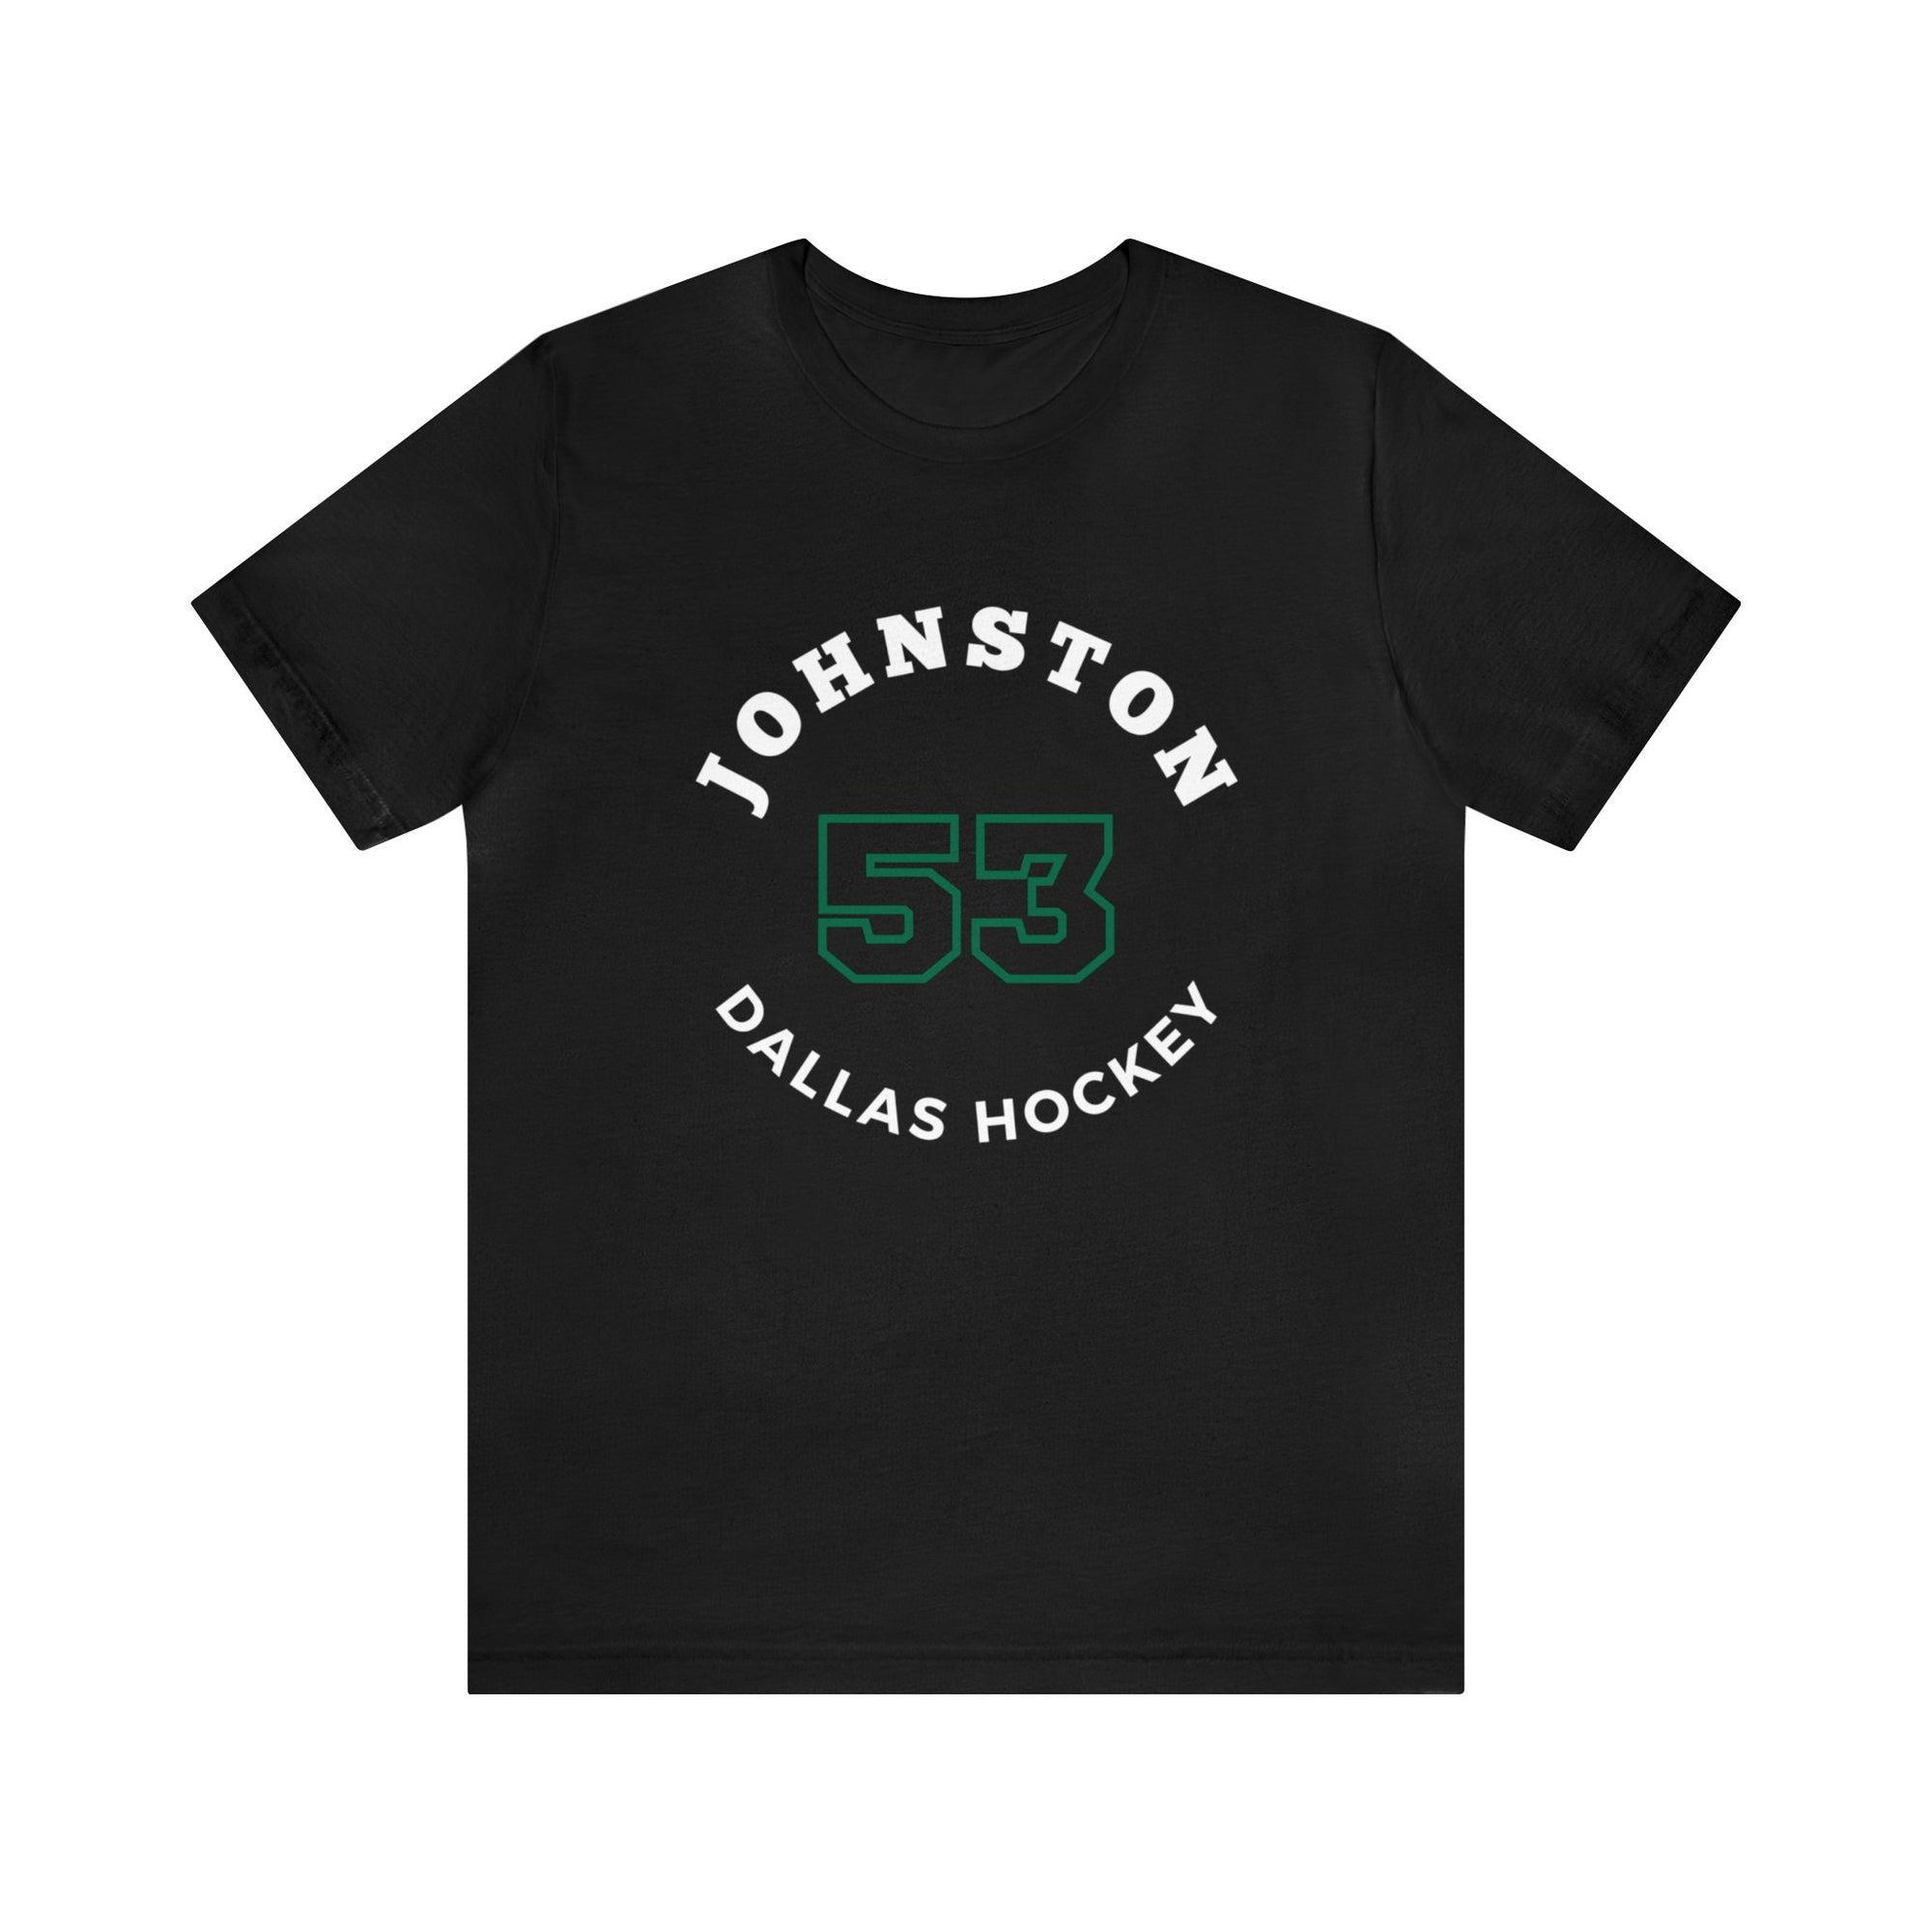 Johnston 53 Dallas Hockey Number Arch Design Unisex T-Shirt